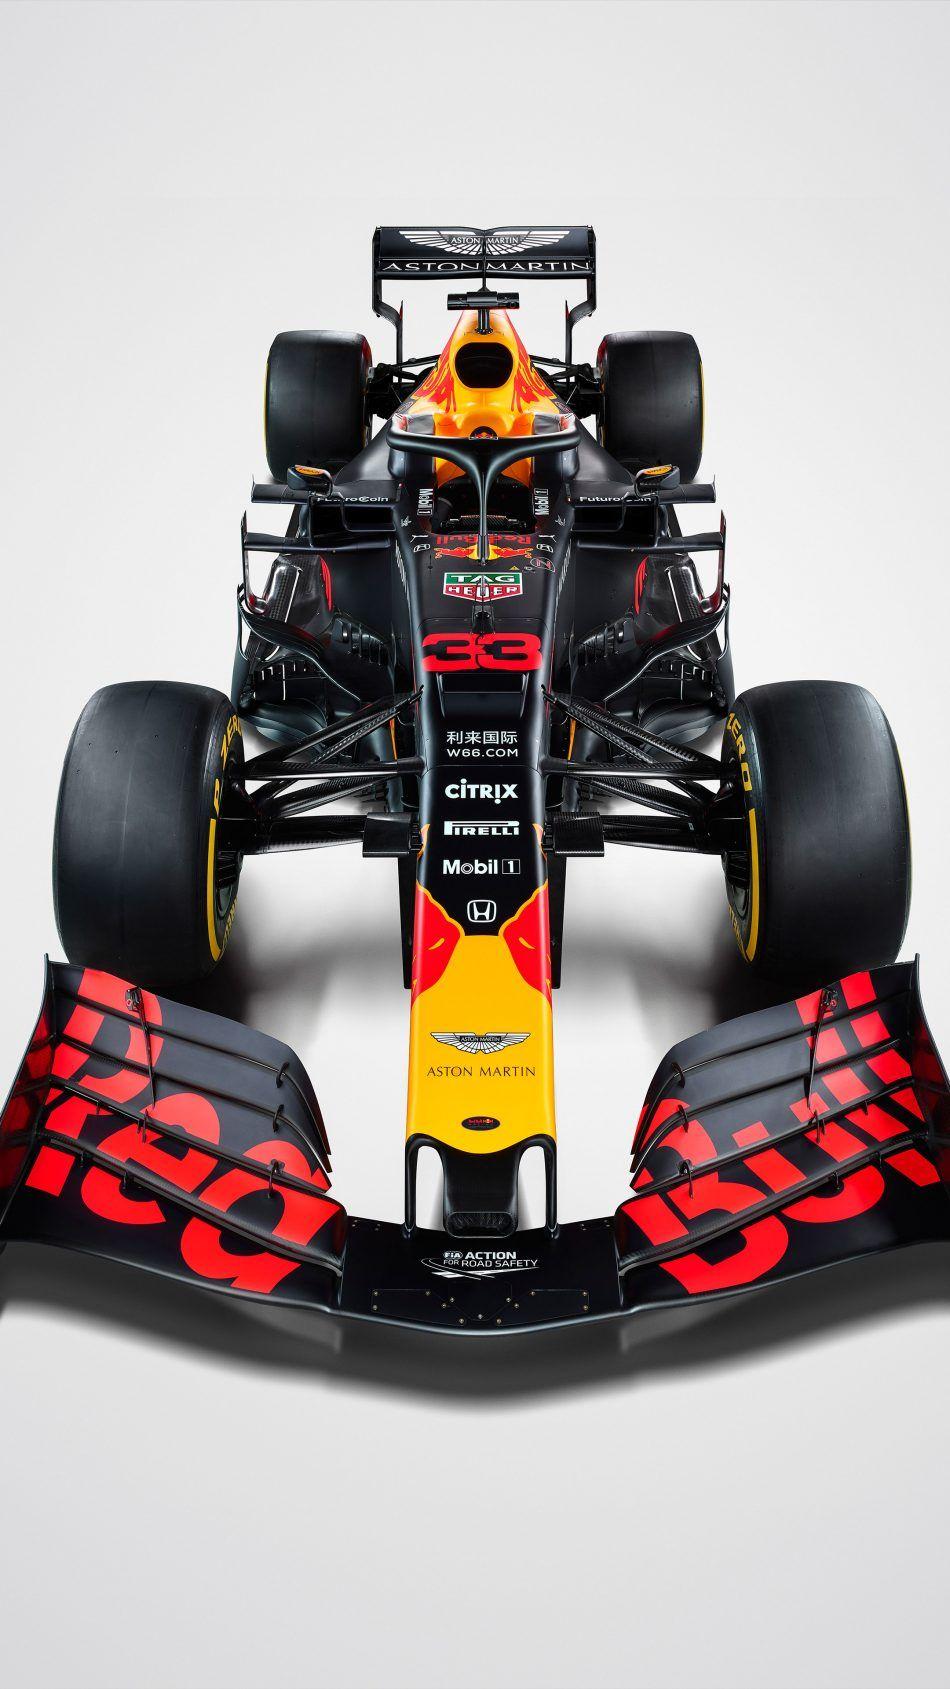 Red Bull RB15 F1 2019 4K Ultra HD Mobile Wallpaper. Coches de carreras, Fondos de pantalla de coches, Carreras de autos